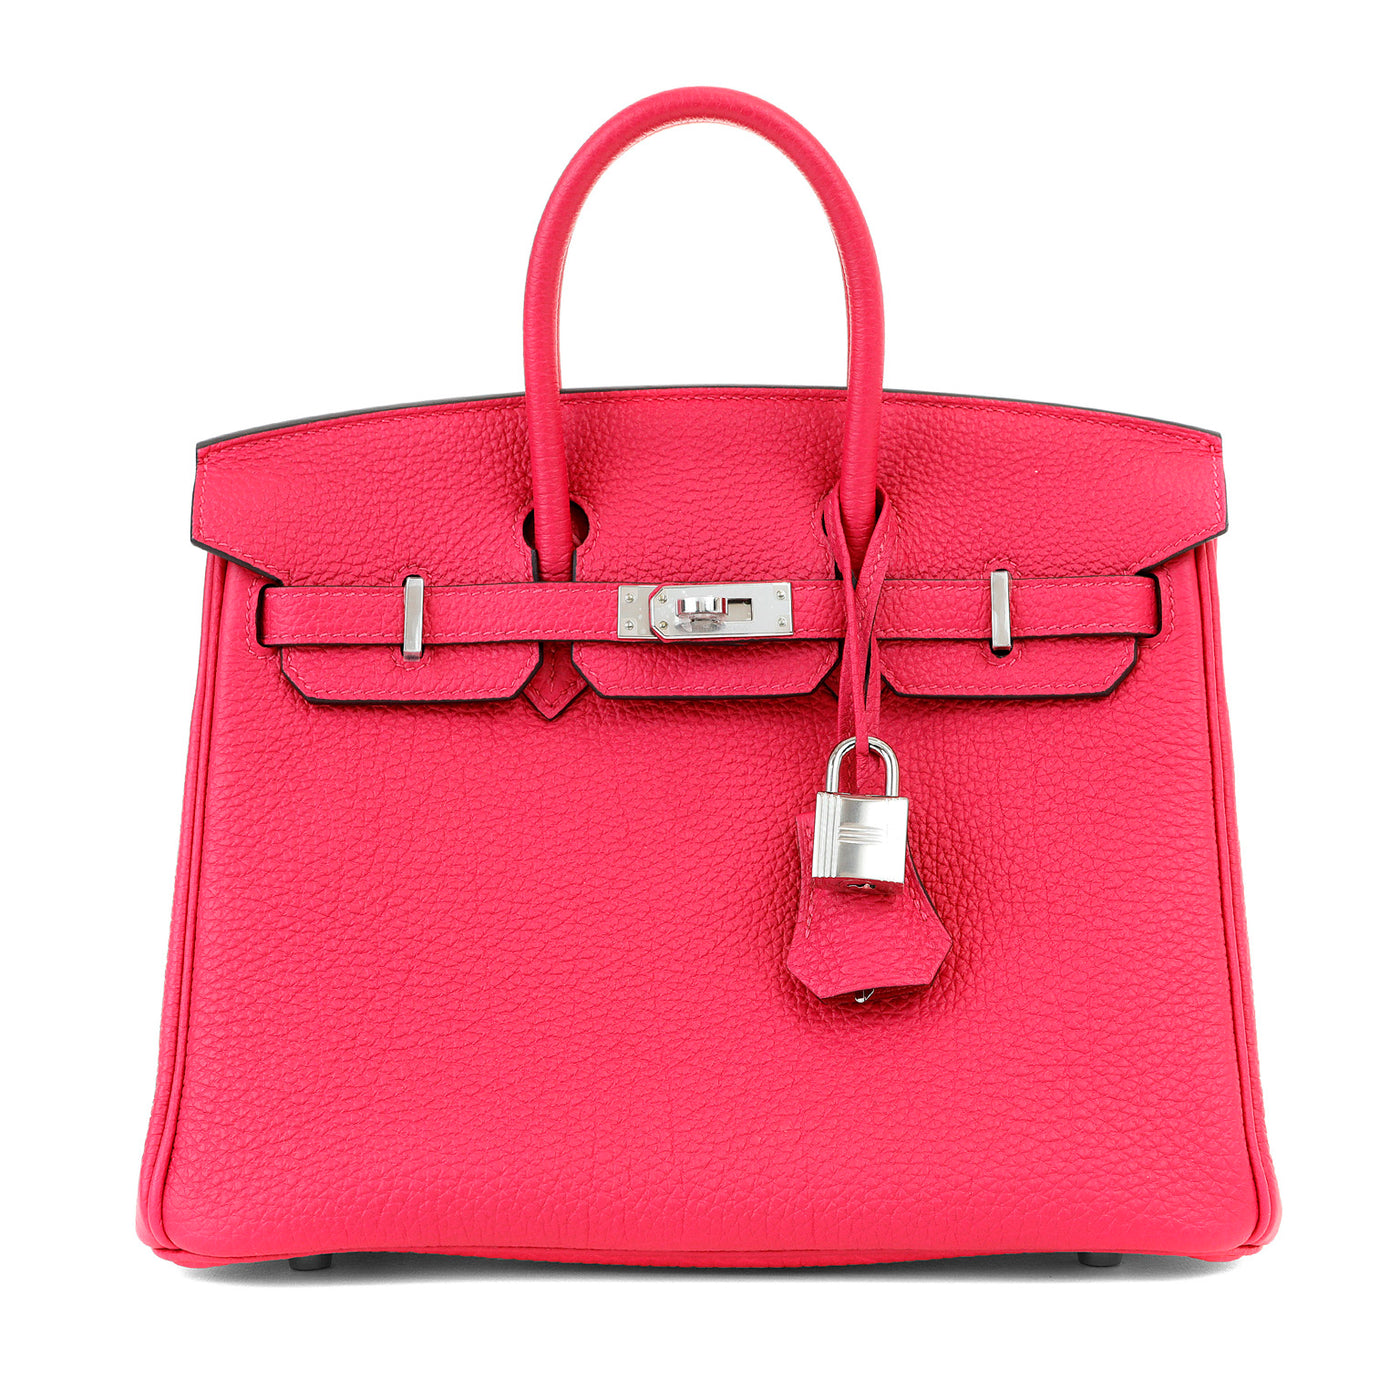 The "Hermès 25cm Strawberry Togo Leather Birkin" is a handbag from the luxury brand Hermès